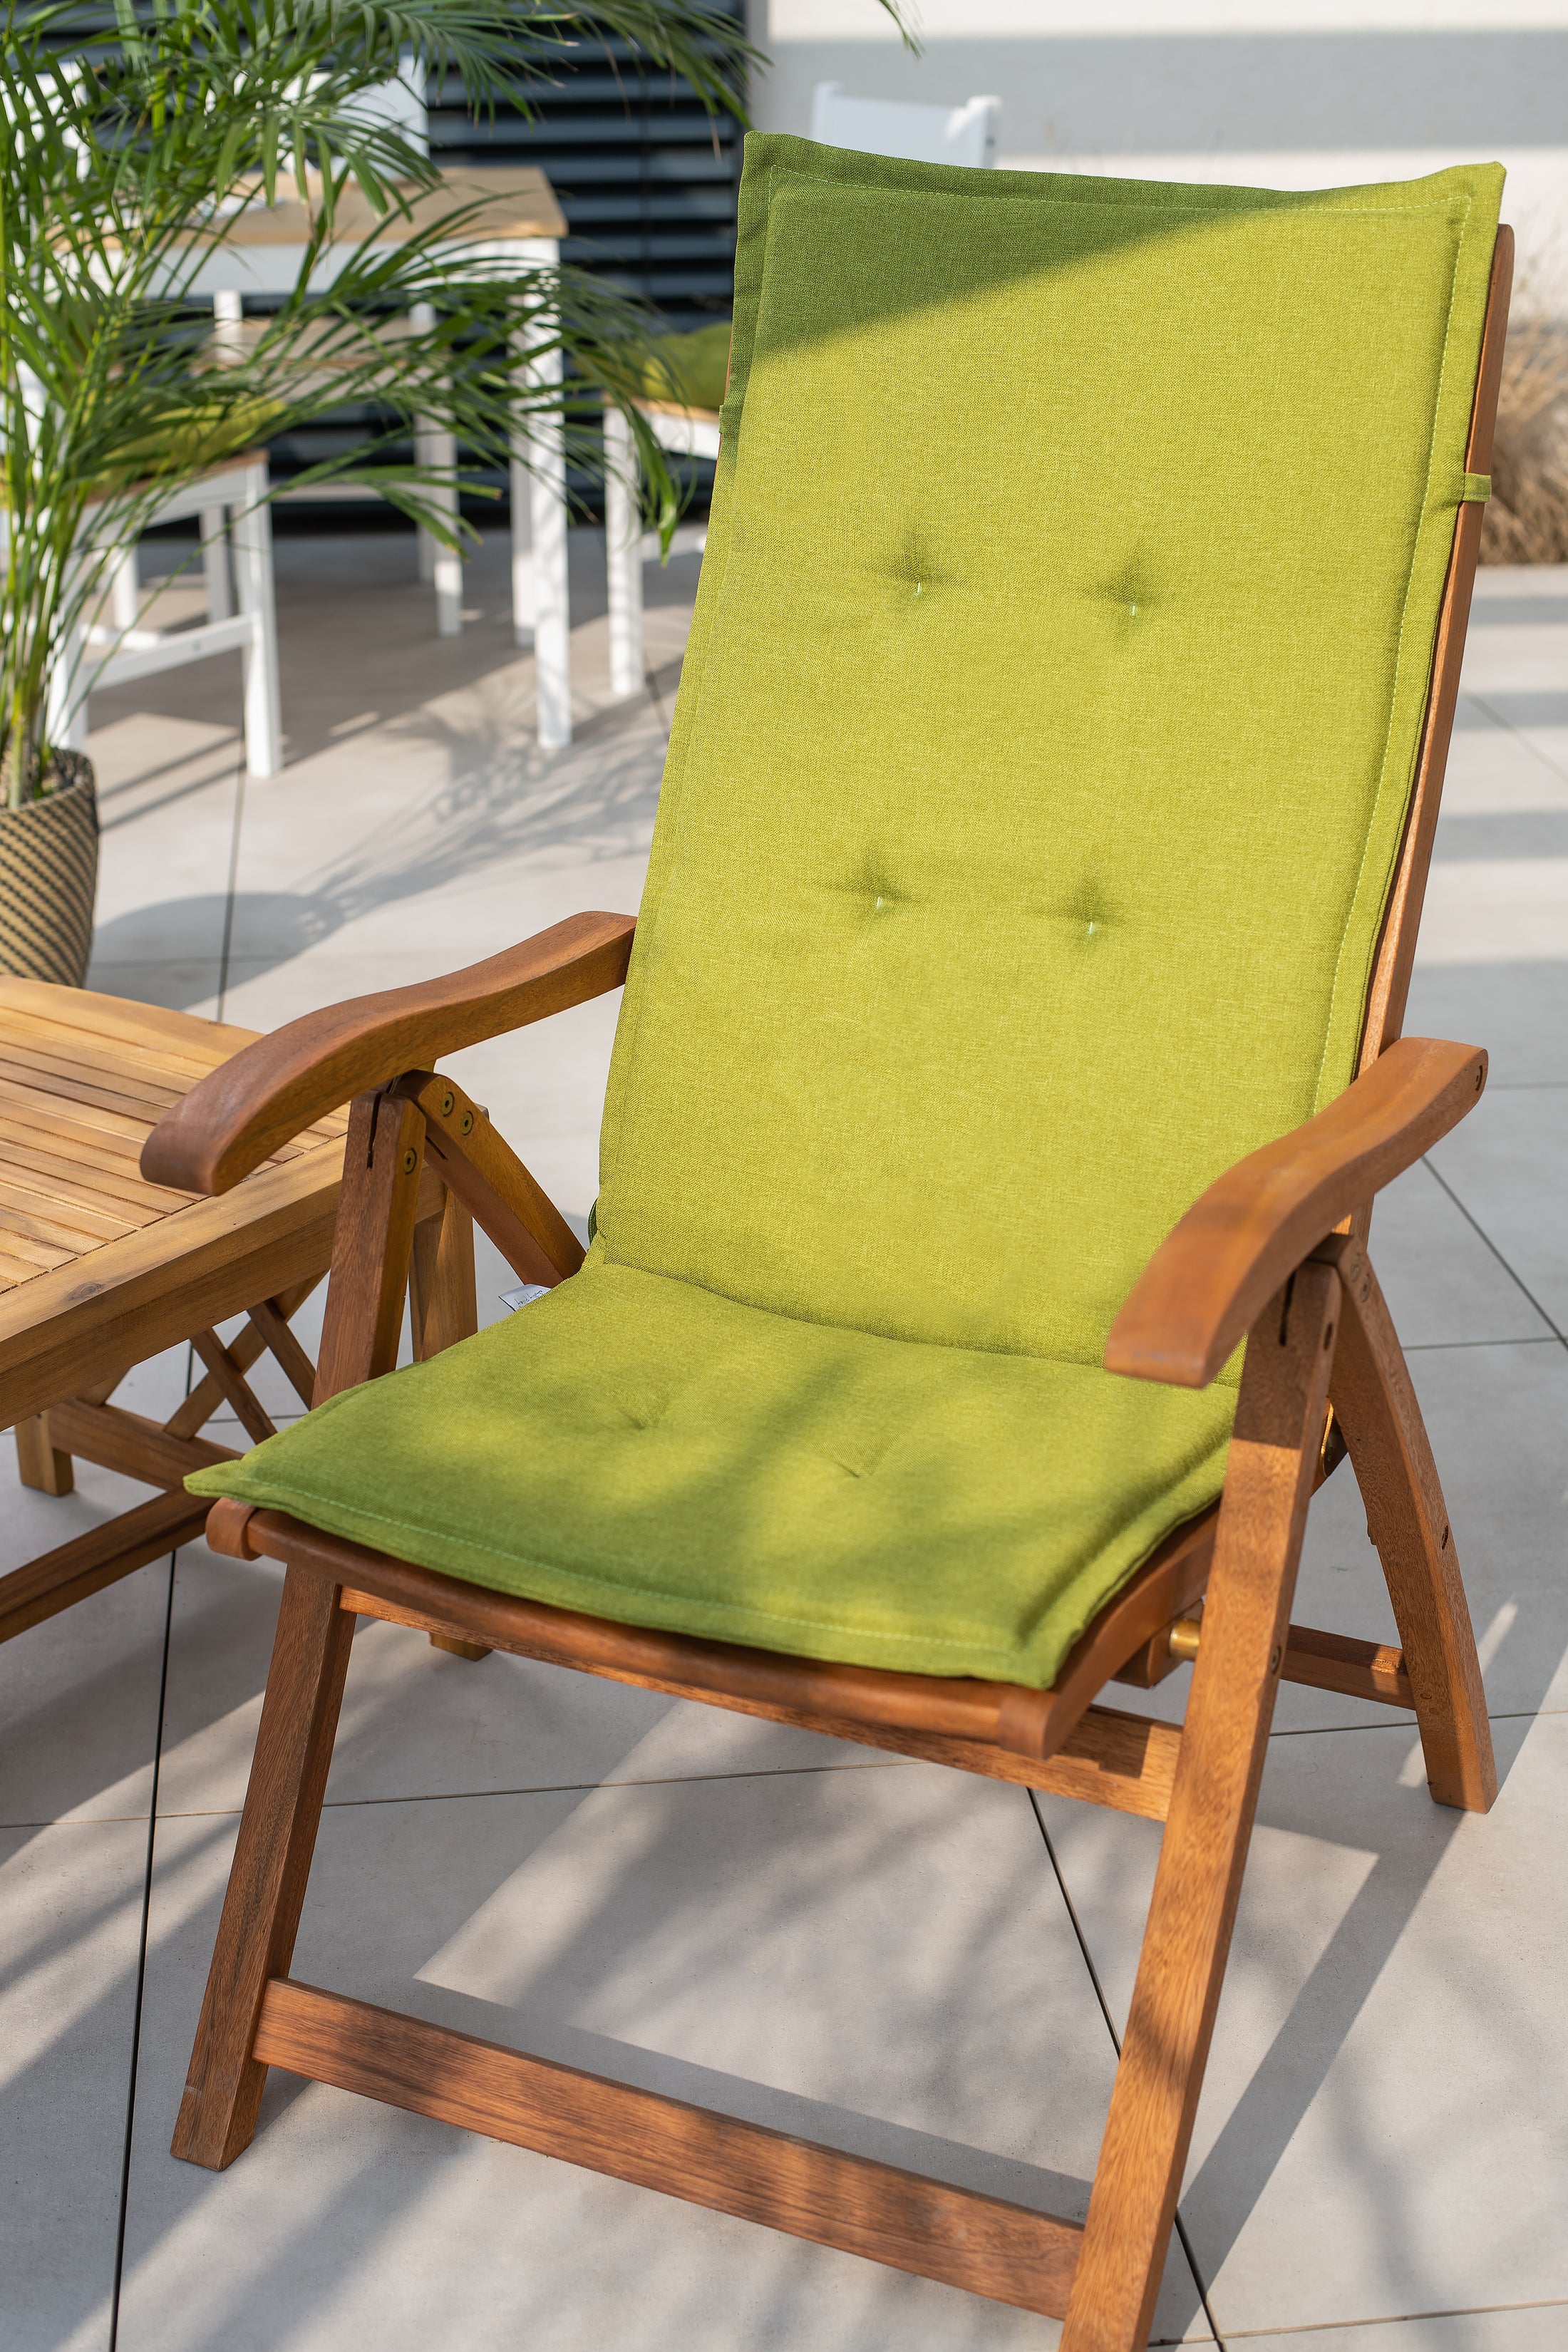 Cuscini per sedie da giardino 120x50 cm impermeabili - cuscini per sedie con schienale alto cuscino impermeabile cuscino per schienale cuscini per sedili mobili da giardino